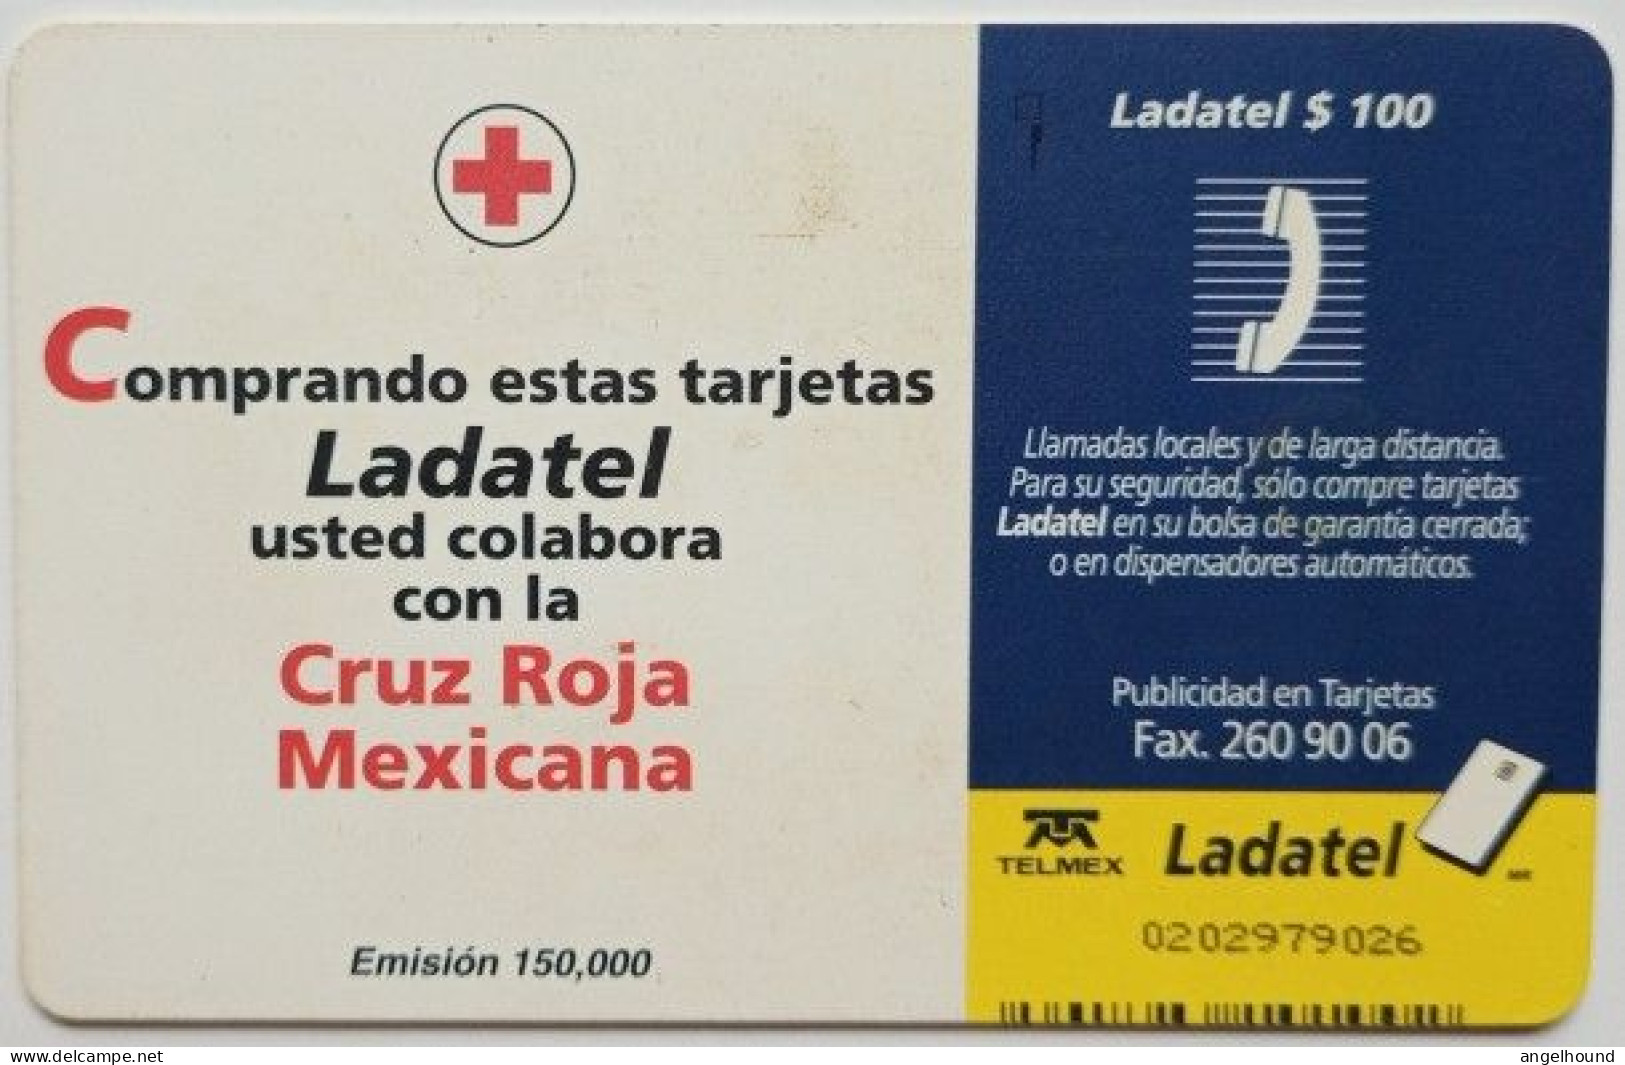 Mexico Ladatel $100 Chip Card - Todo Mexico - Cruz Roja - Mexico